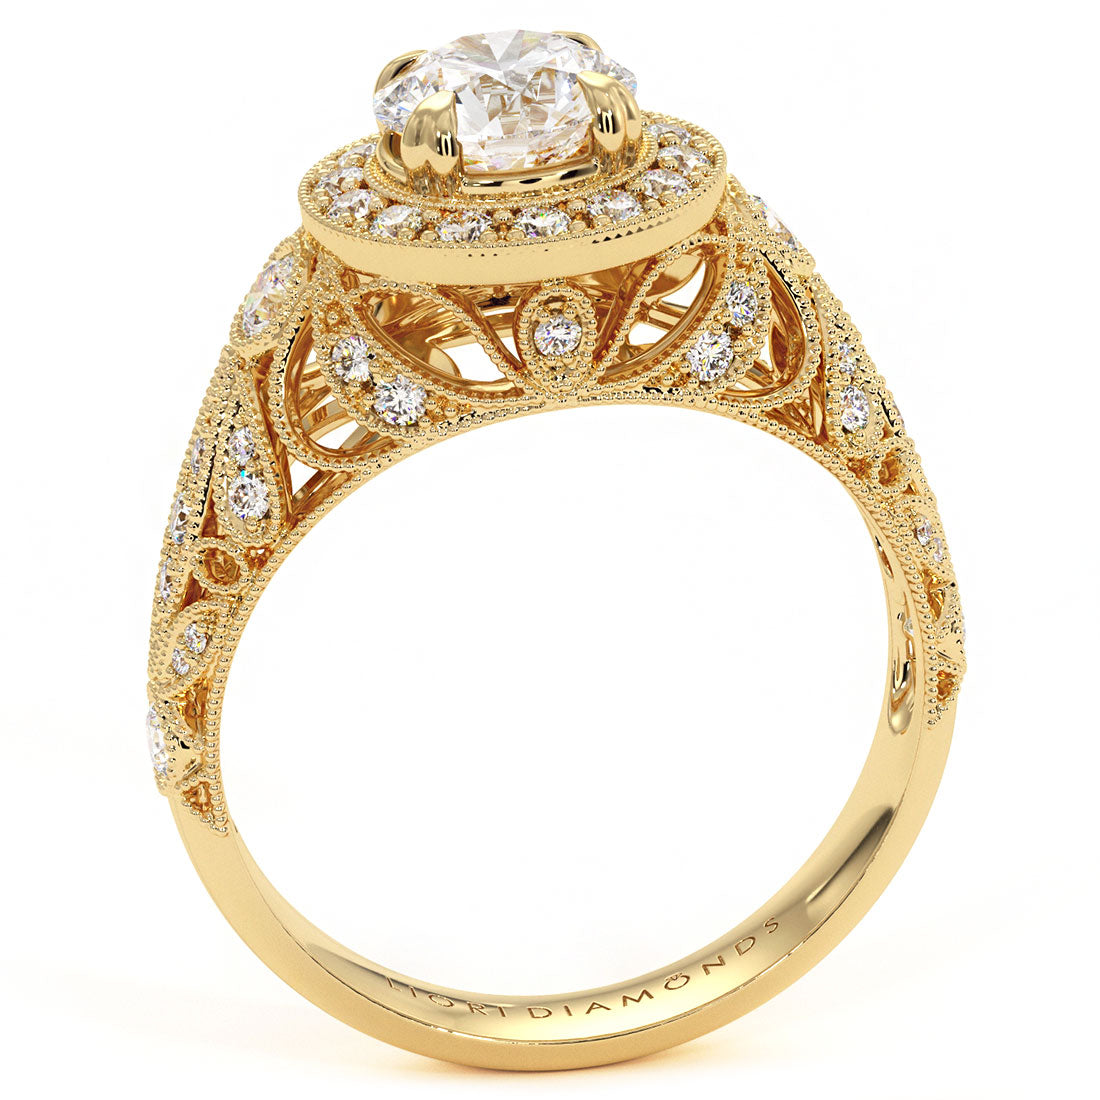 1.54 Carat G-SI2 Round Diamond Engagement Ring 14k Yellow Gold Vintage Style